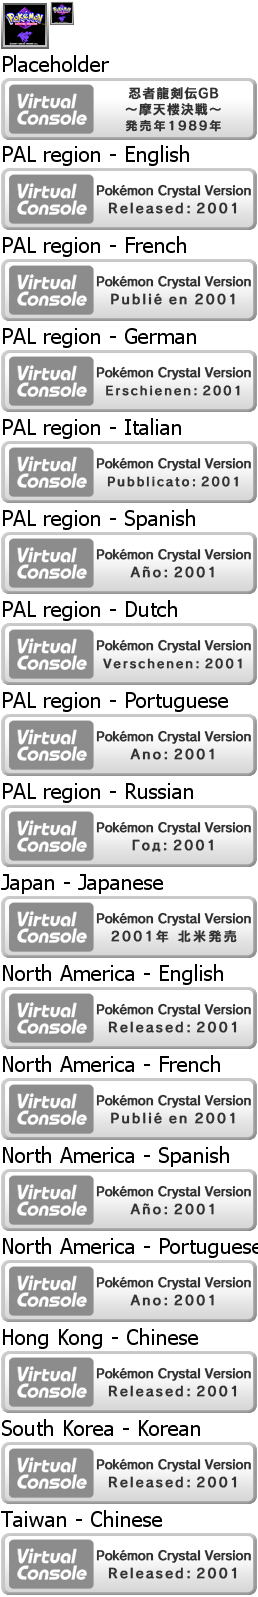 Virtual Console - Pokémon Crystal Version